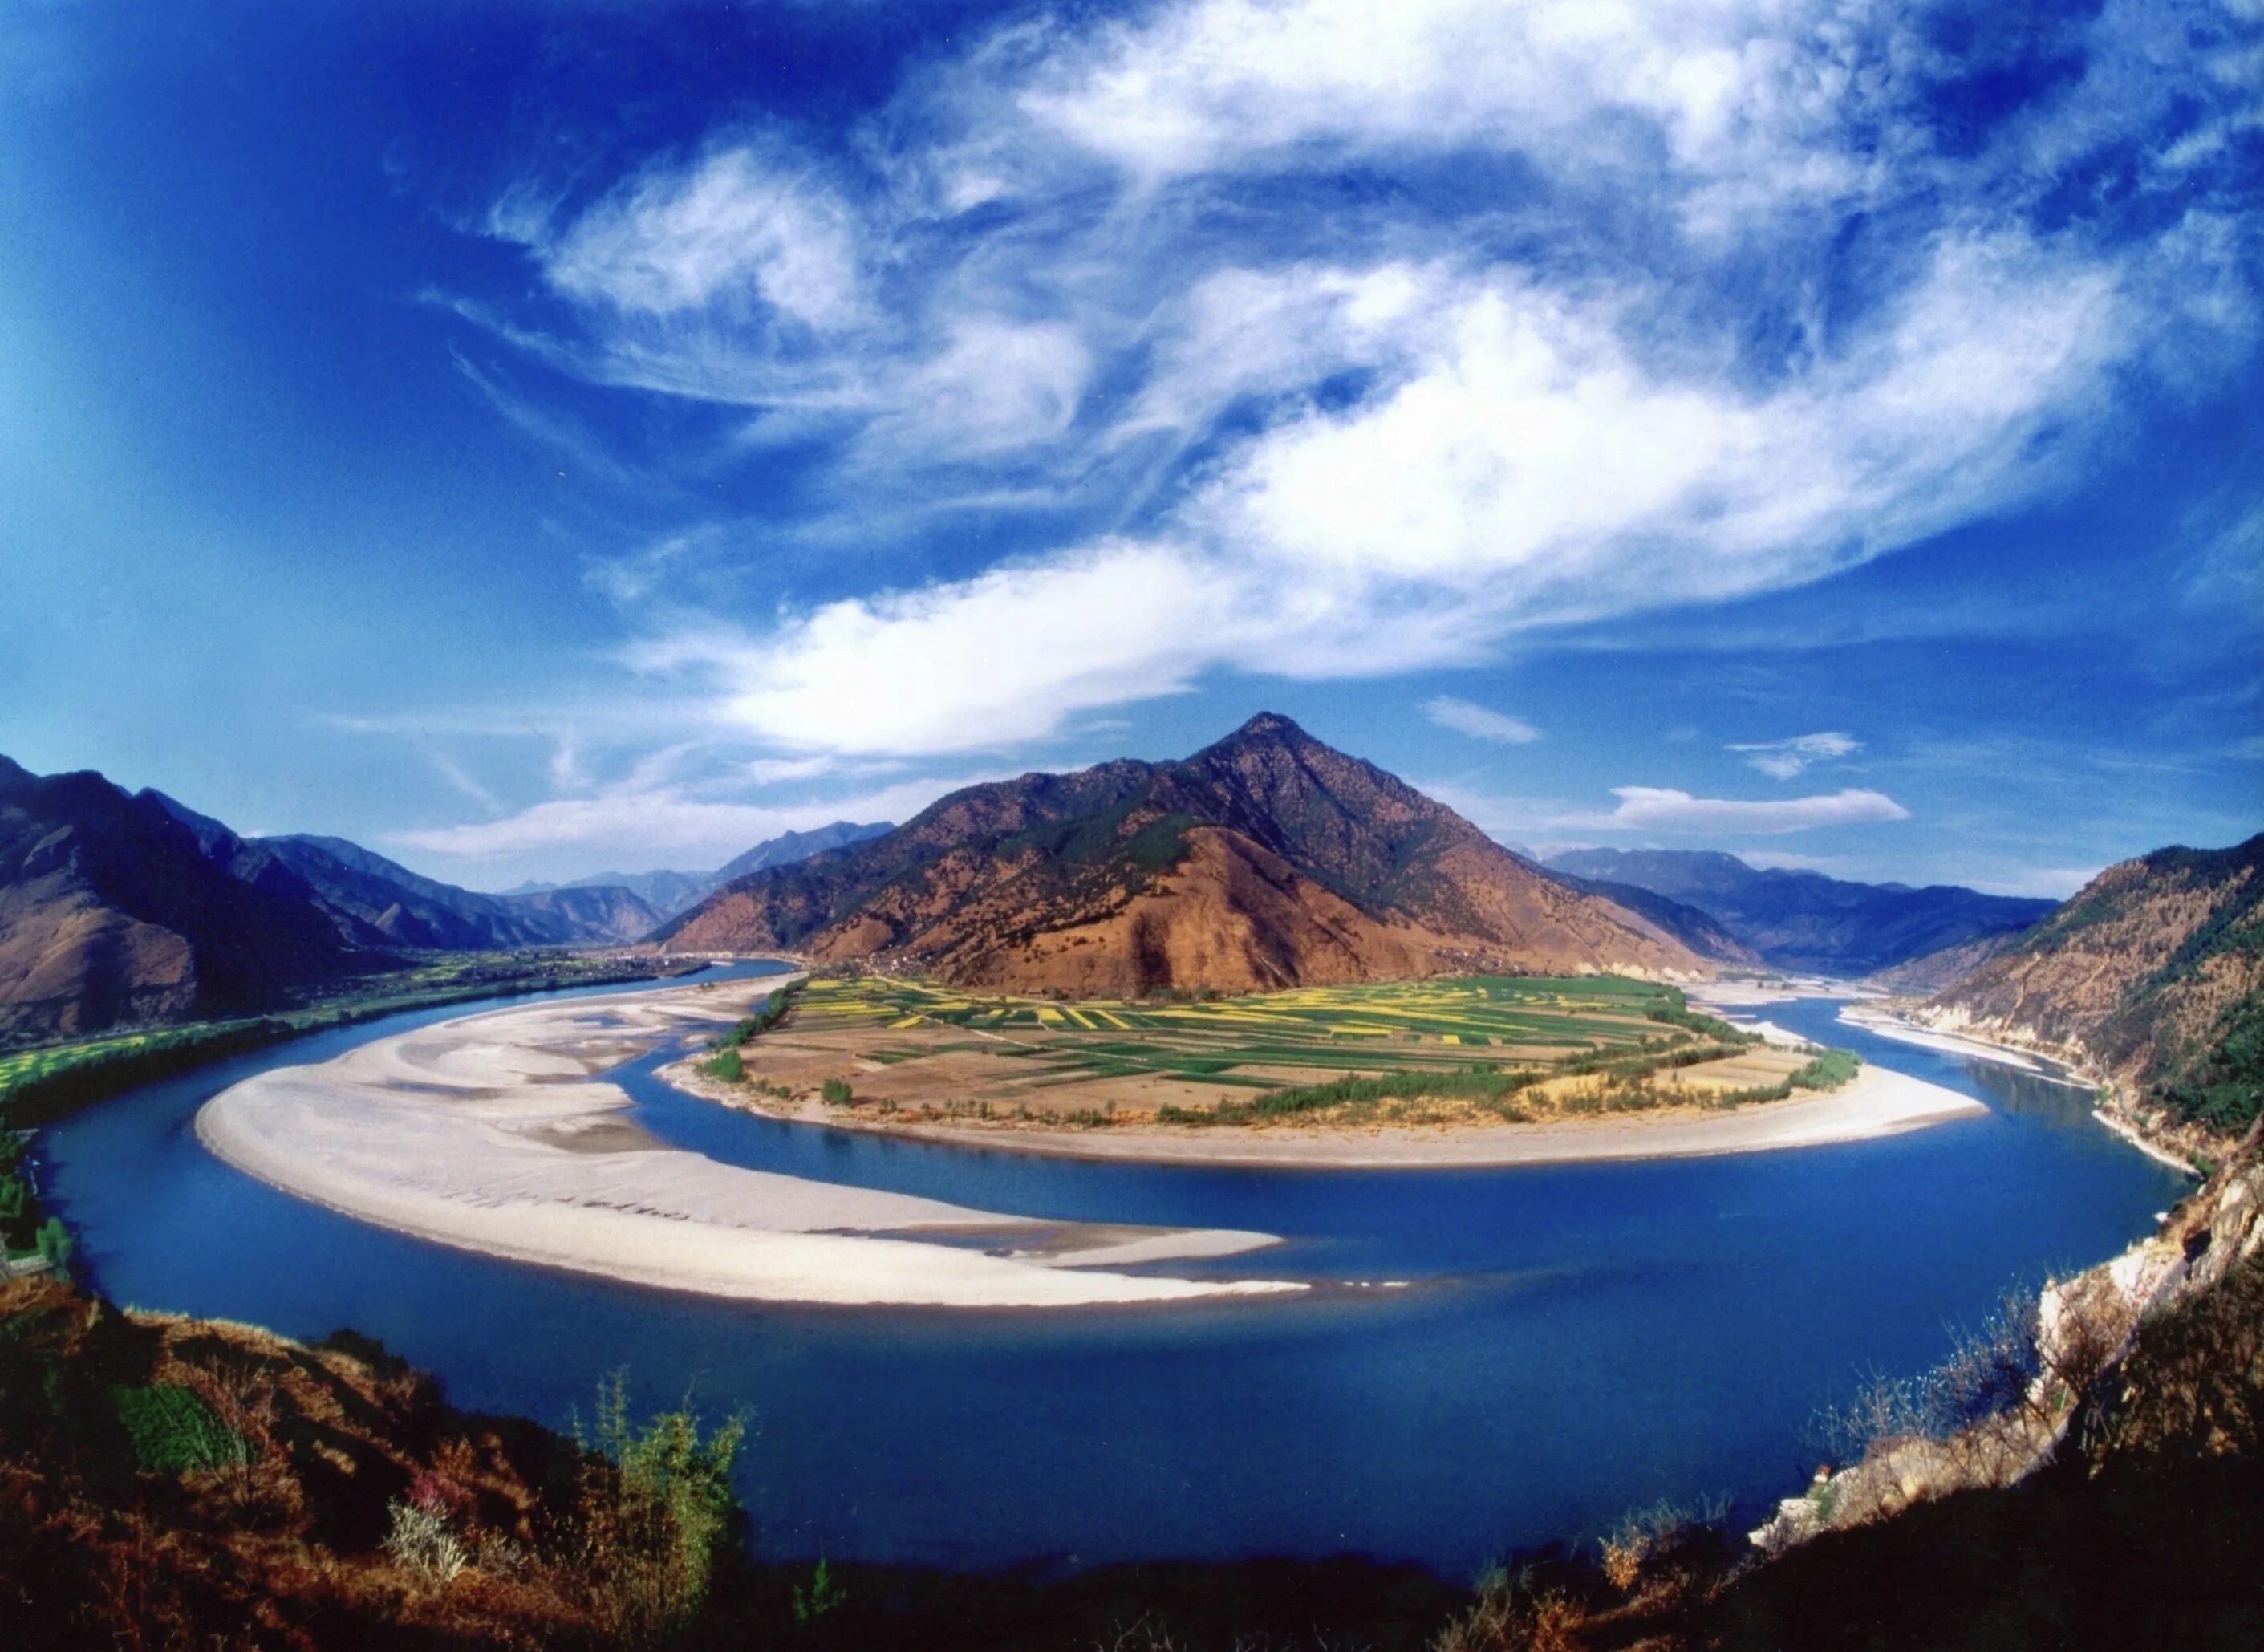 Реки евразии 2500 км. Река Янцзы Китай. Янцзы голубая река. Река Янцзы голубая река. Древний Китай Янцзы.